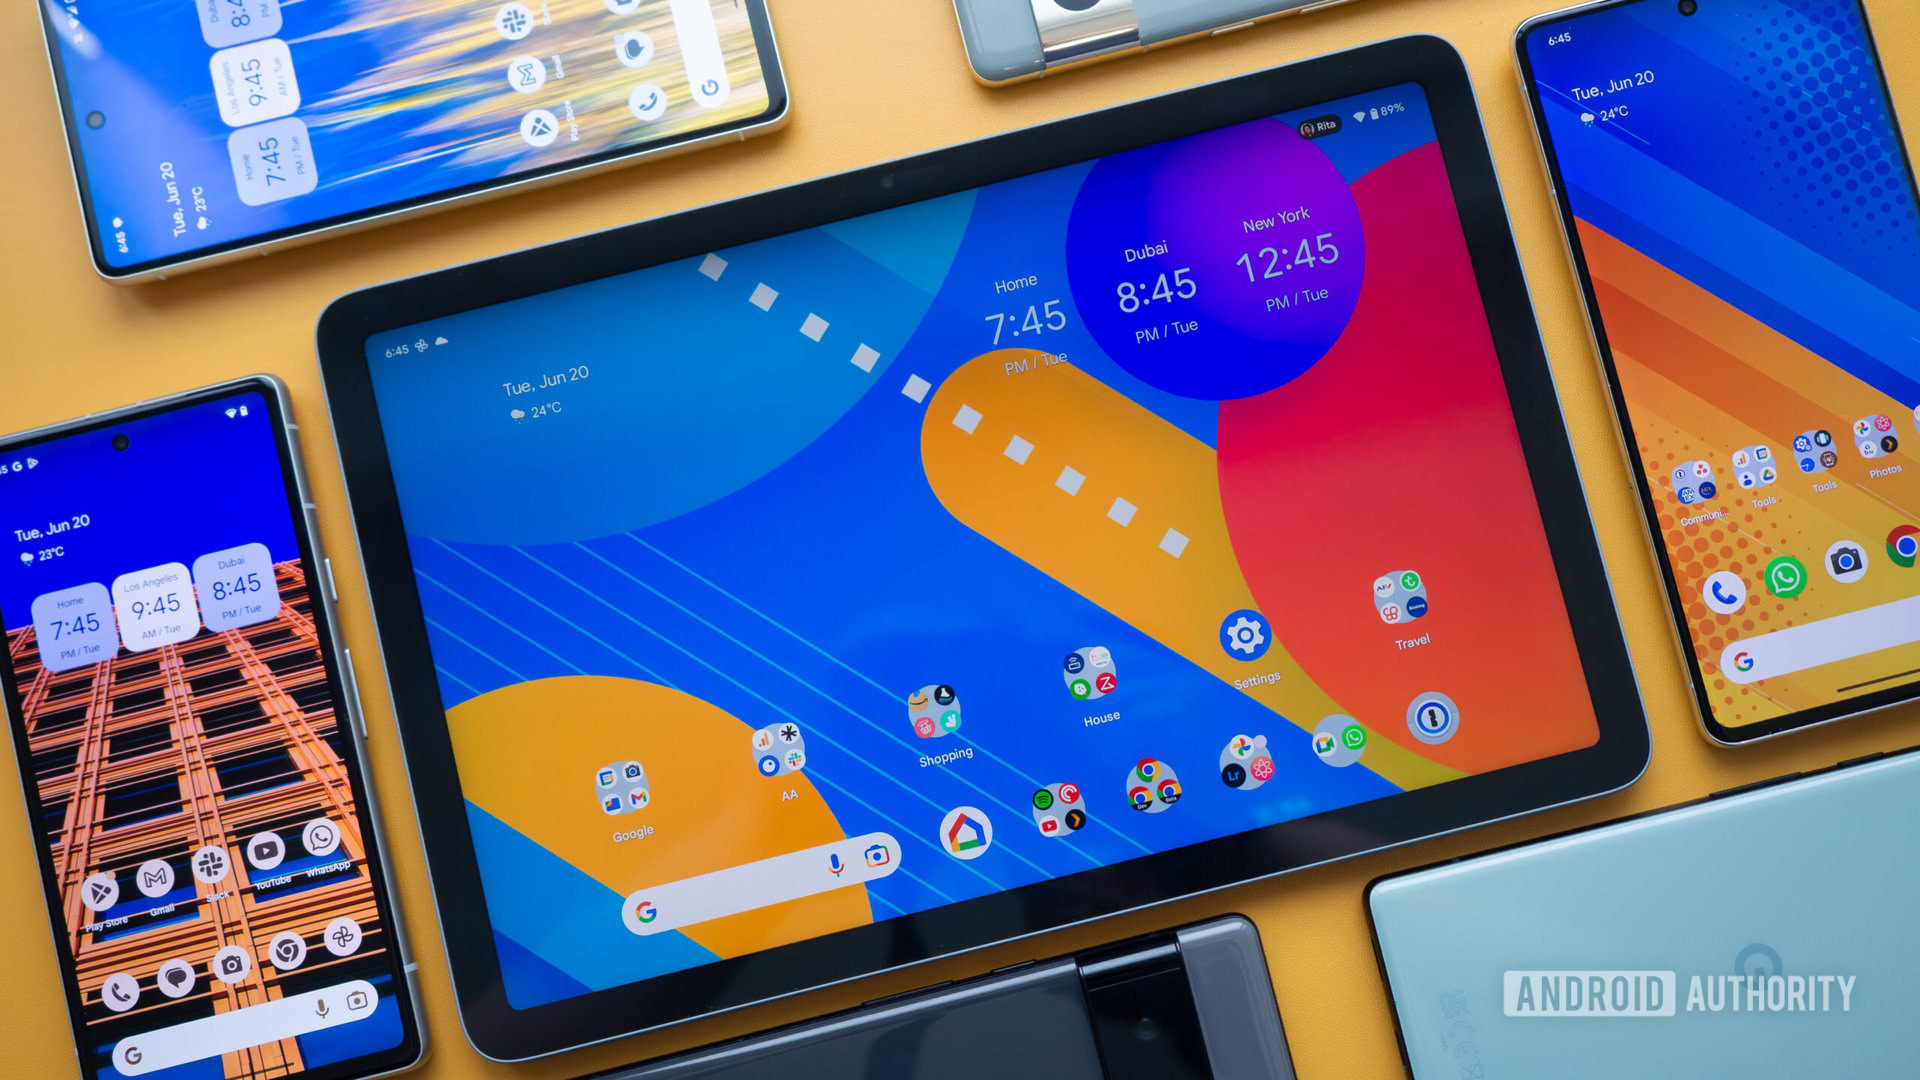 Google Pixel Tablet announced: Specs, release date, price, preorder details